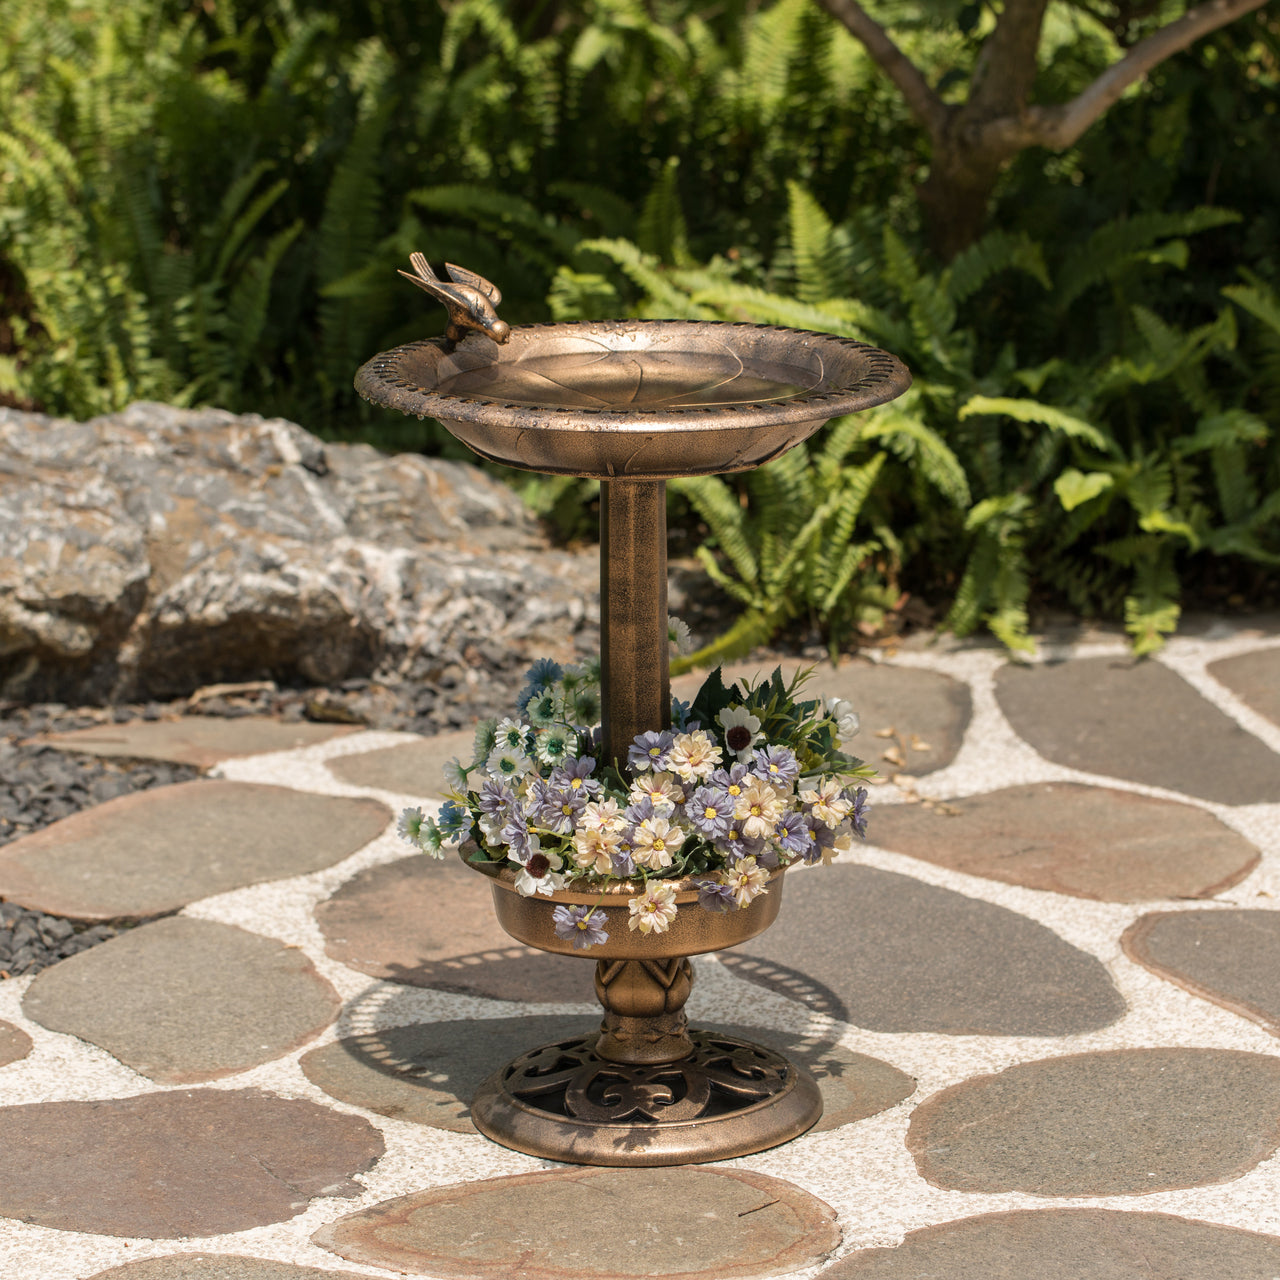 Zen Outdoor Decor Garden Bird Bath and Solar Powered Fountain - Personal Hour for Yoga and Meditations 